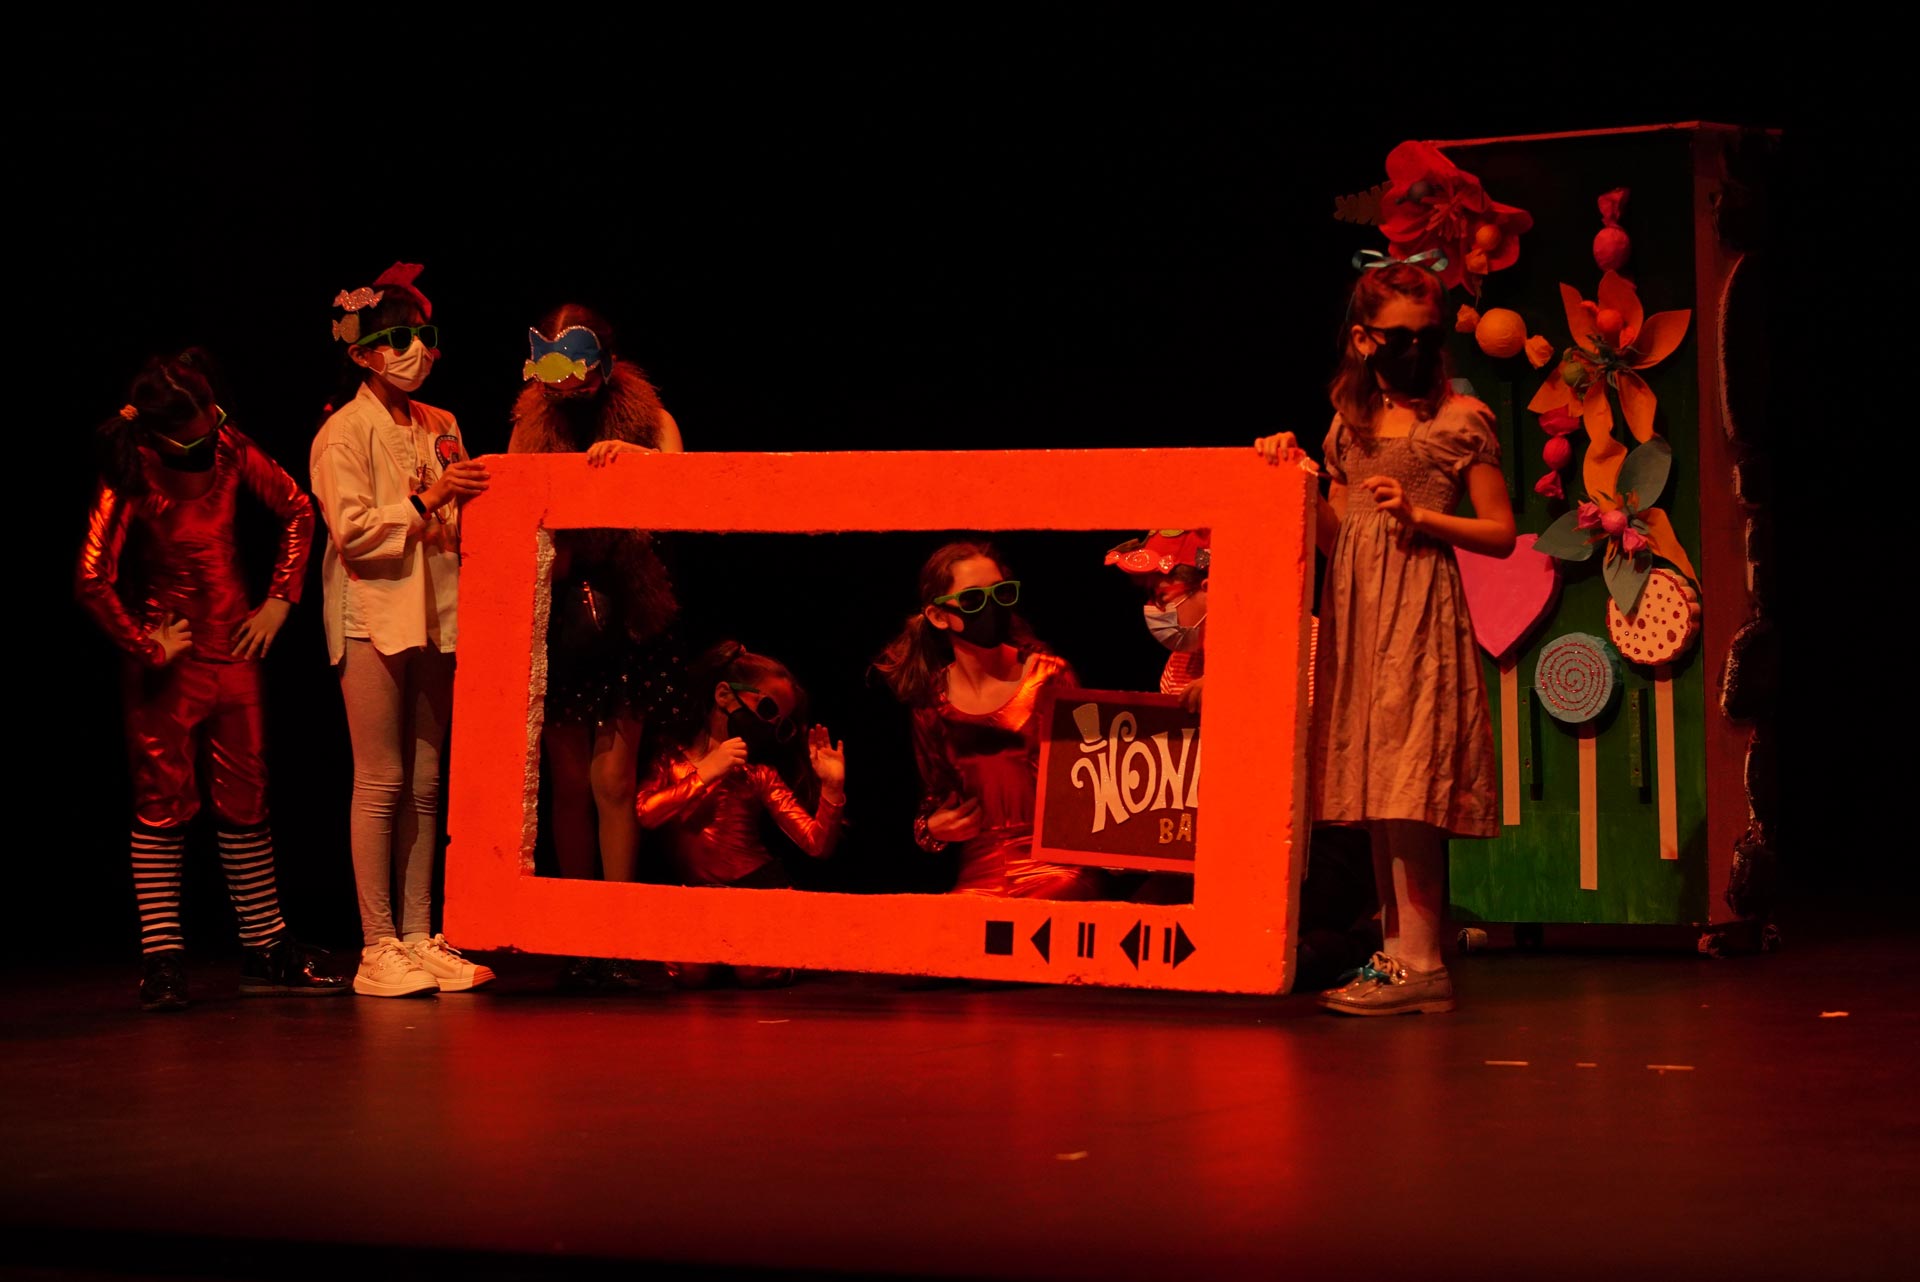 Teatro infantil "Charlie y la fábrica de chocolate" de butaca 78 eserlekua